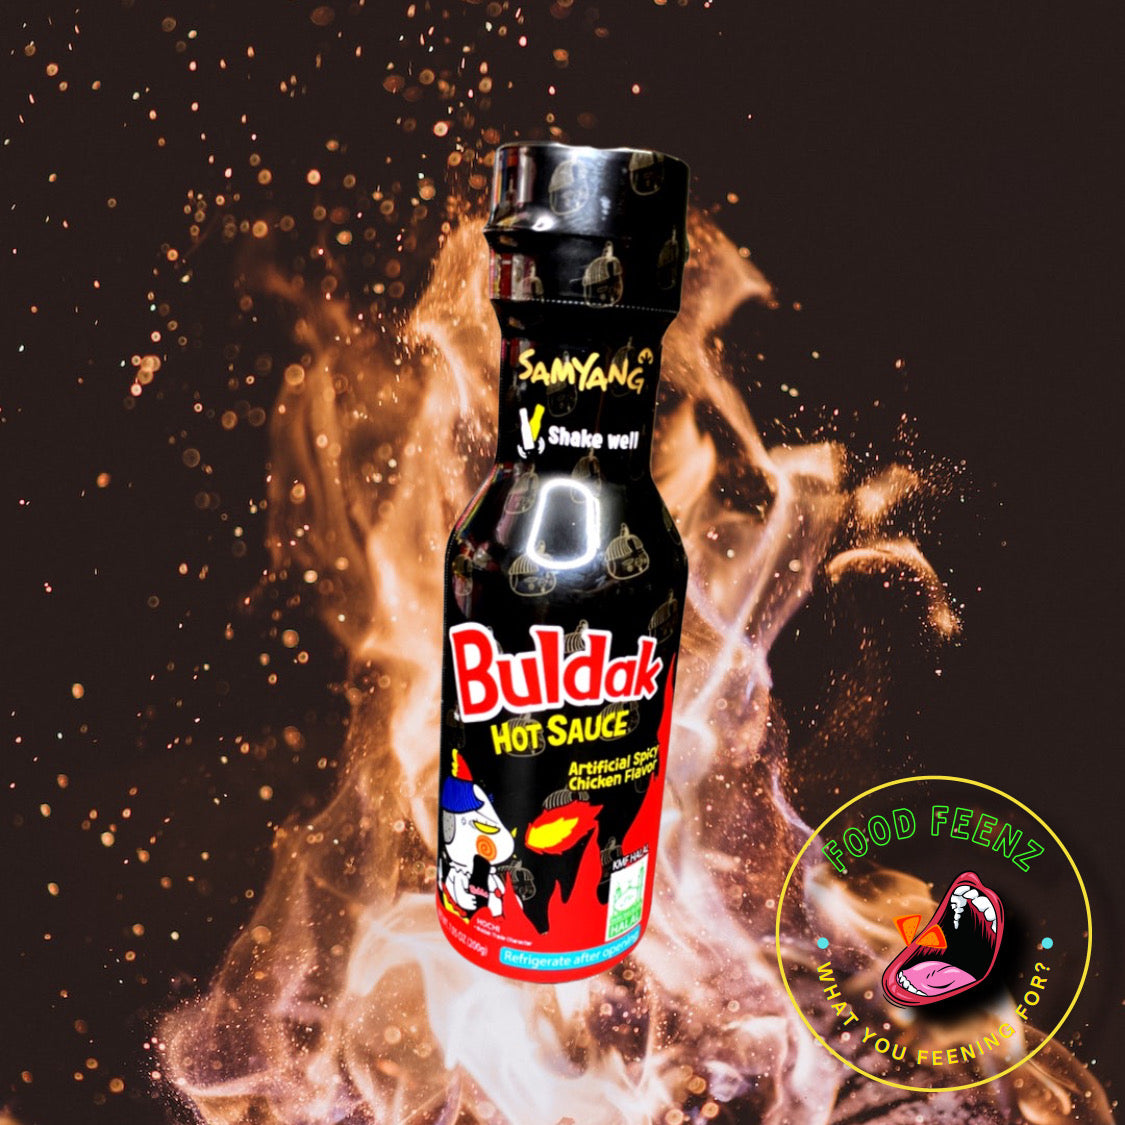 Buldak Original Spicy Chicken Hot Sauce (Korea)